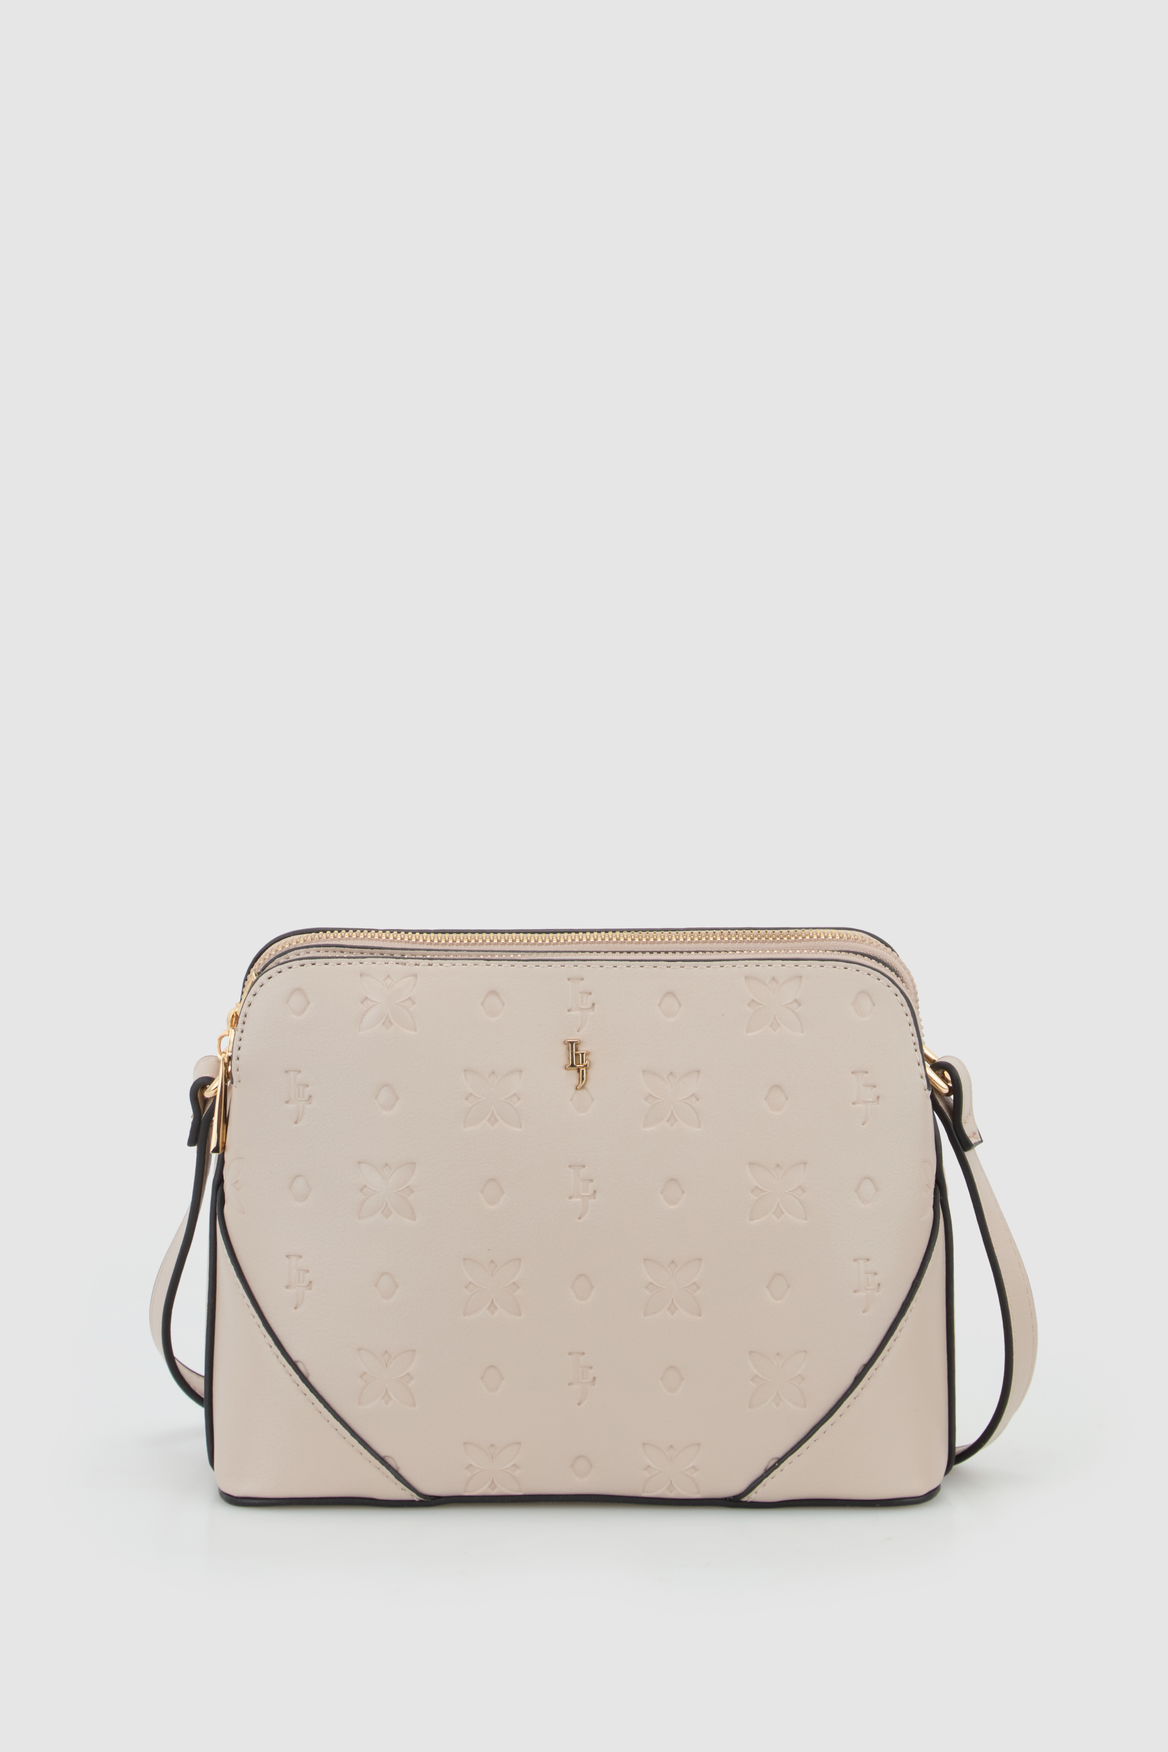 Laura Jones Handbag/Crossbody (New with tag) | Cross body handbags,  Handbag, Chic bags